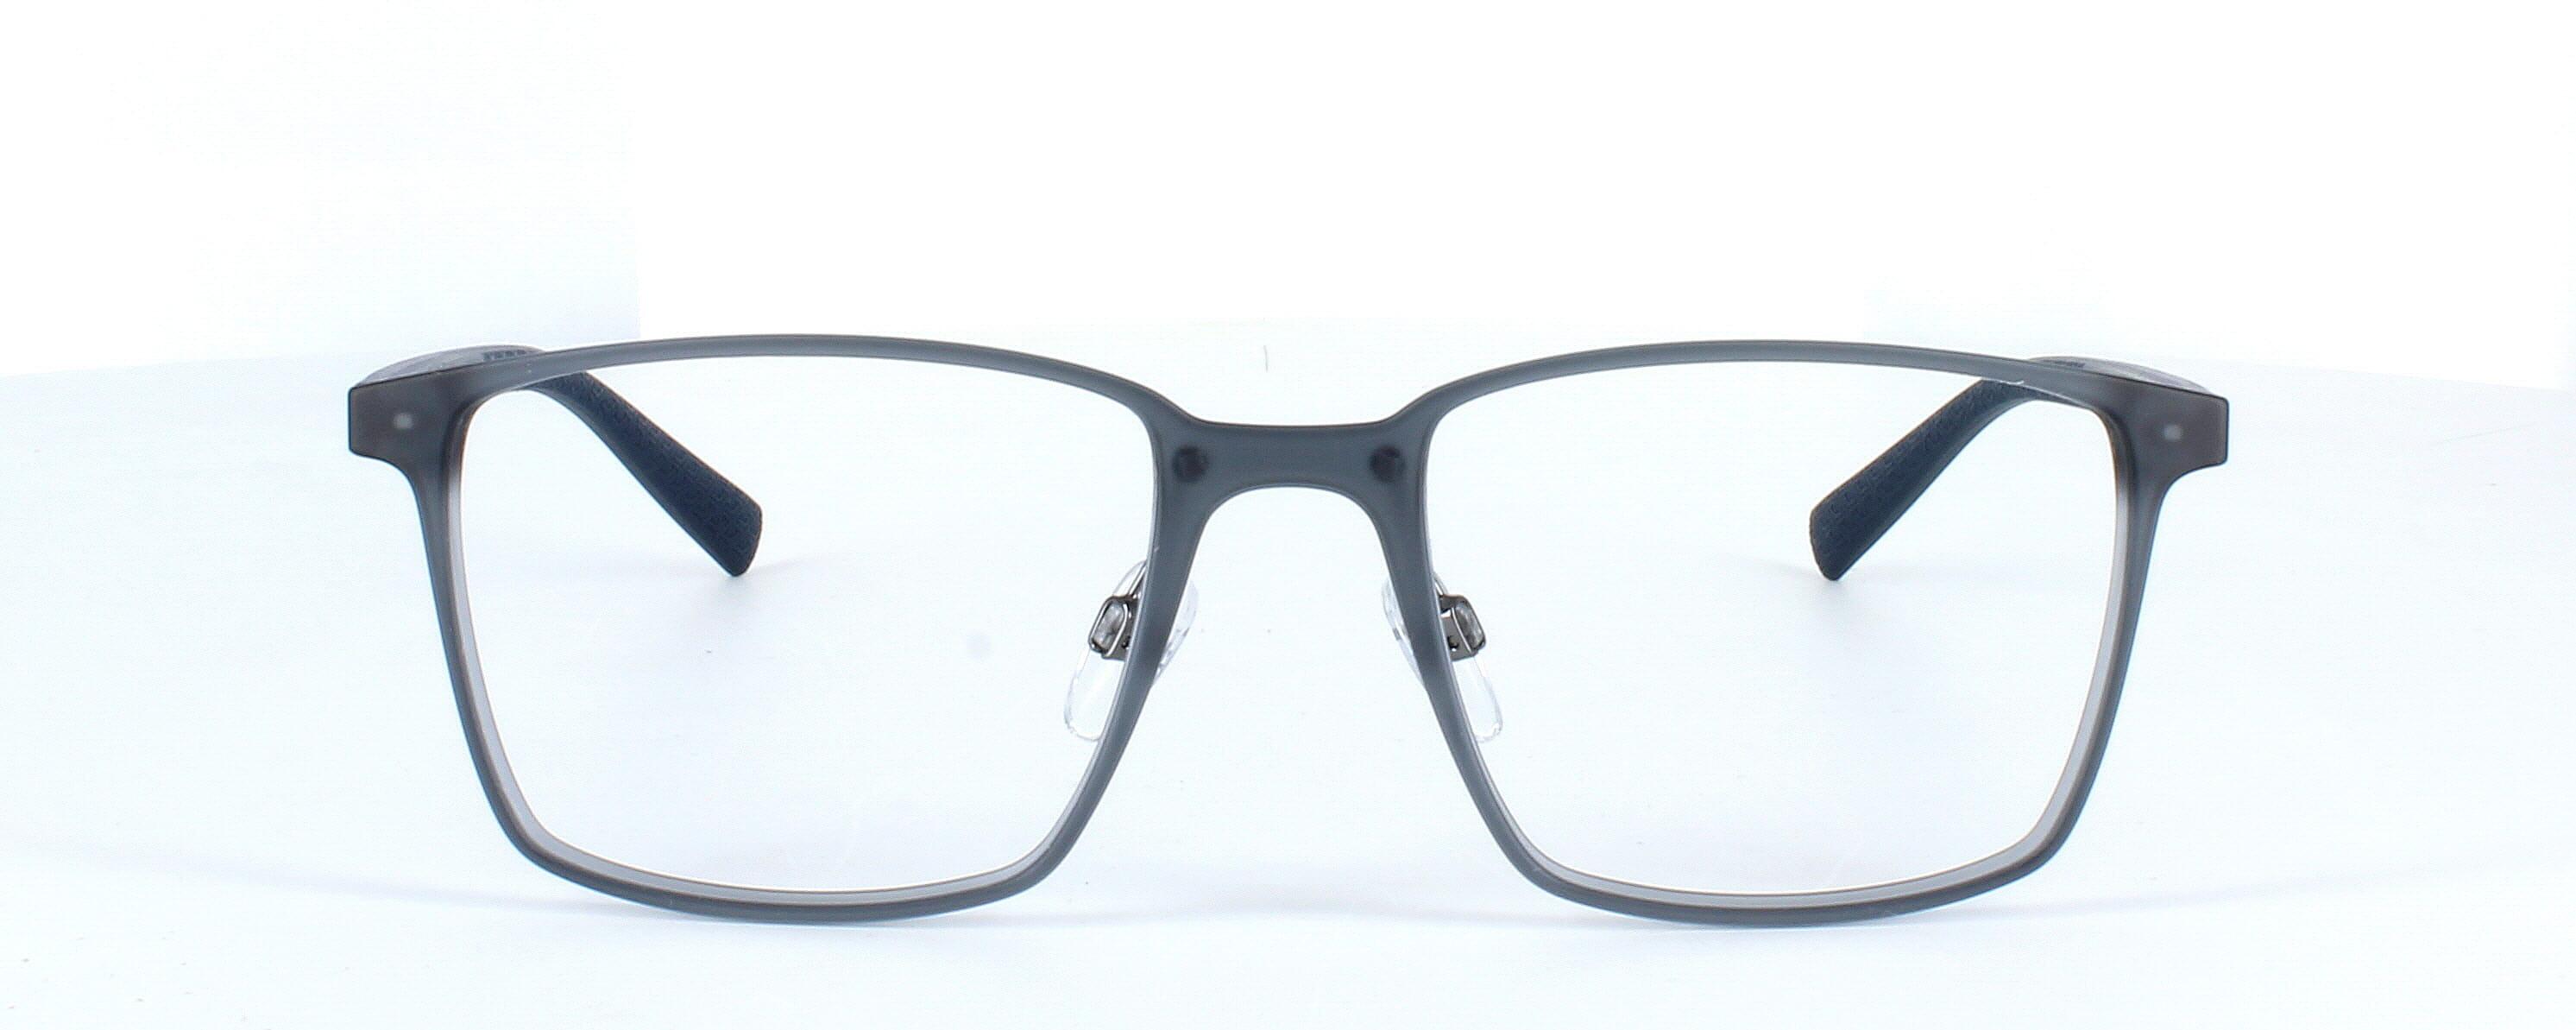 Benetton BEO1009 921 - Gent's matt crystal grey rectangular shaped glasses frame - image view 2